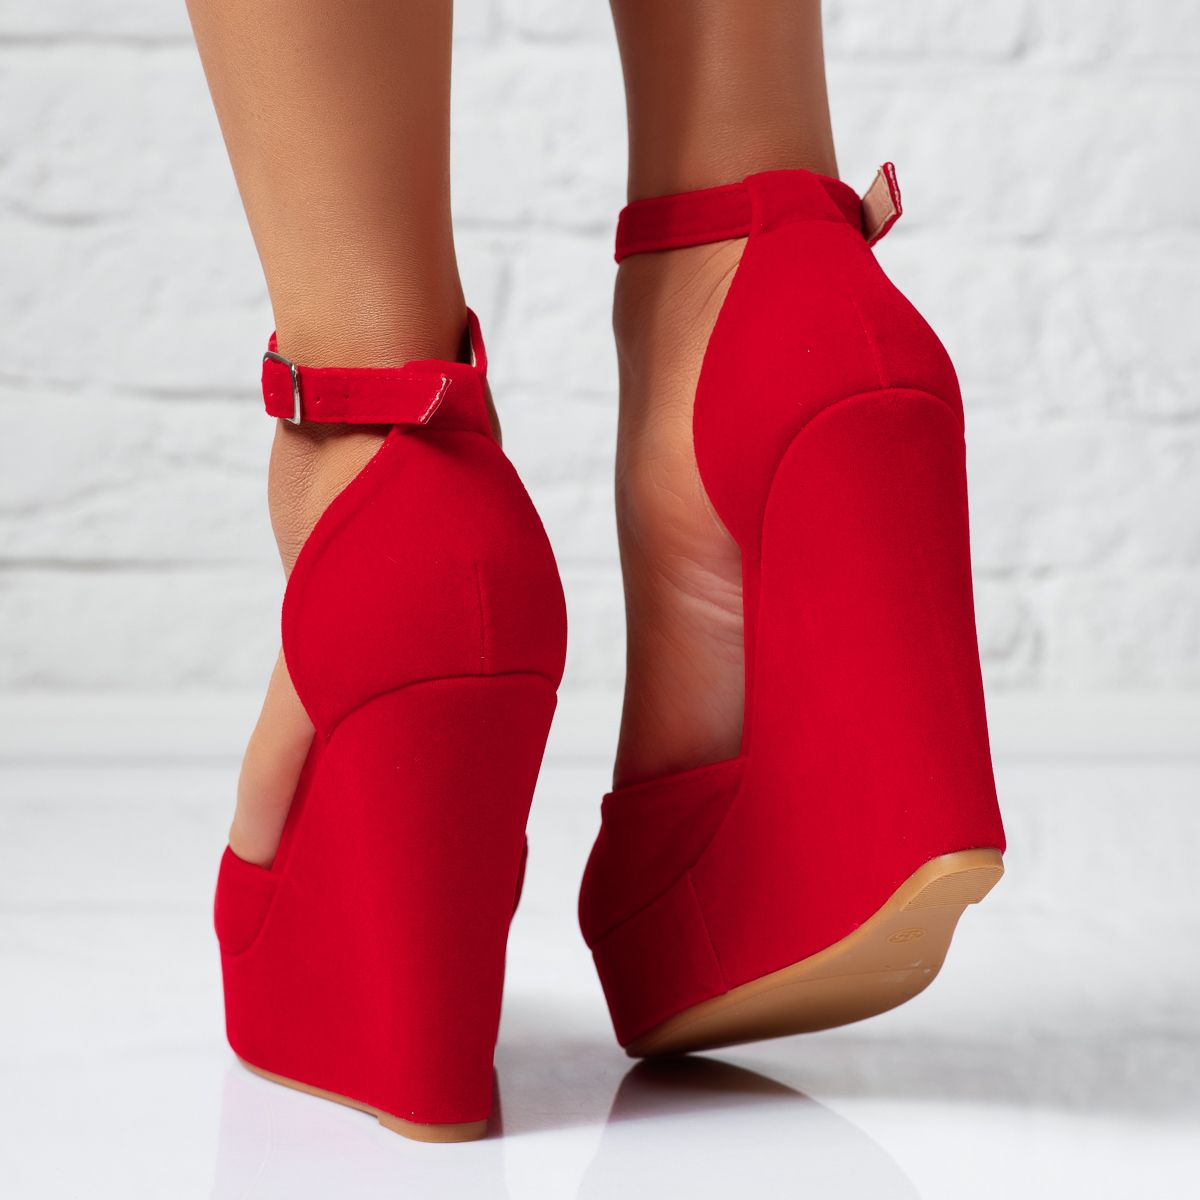 Pantofi Dama cu Platforma Monaco Rosii #13948